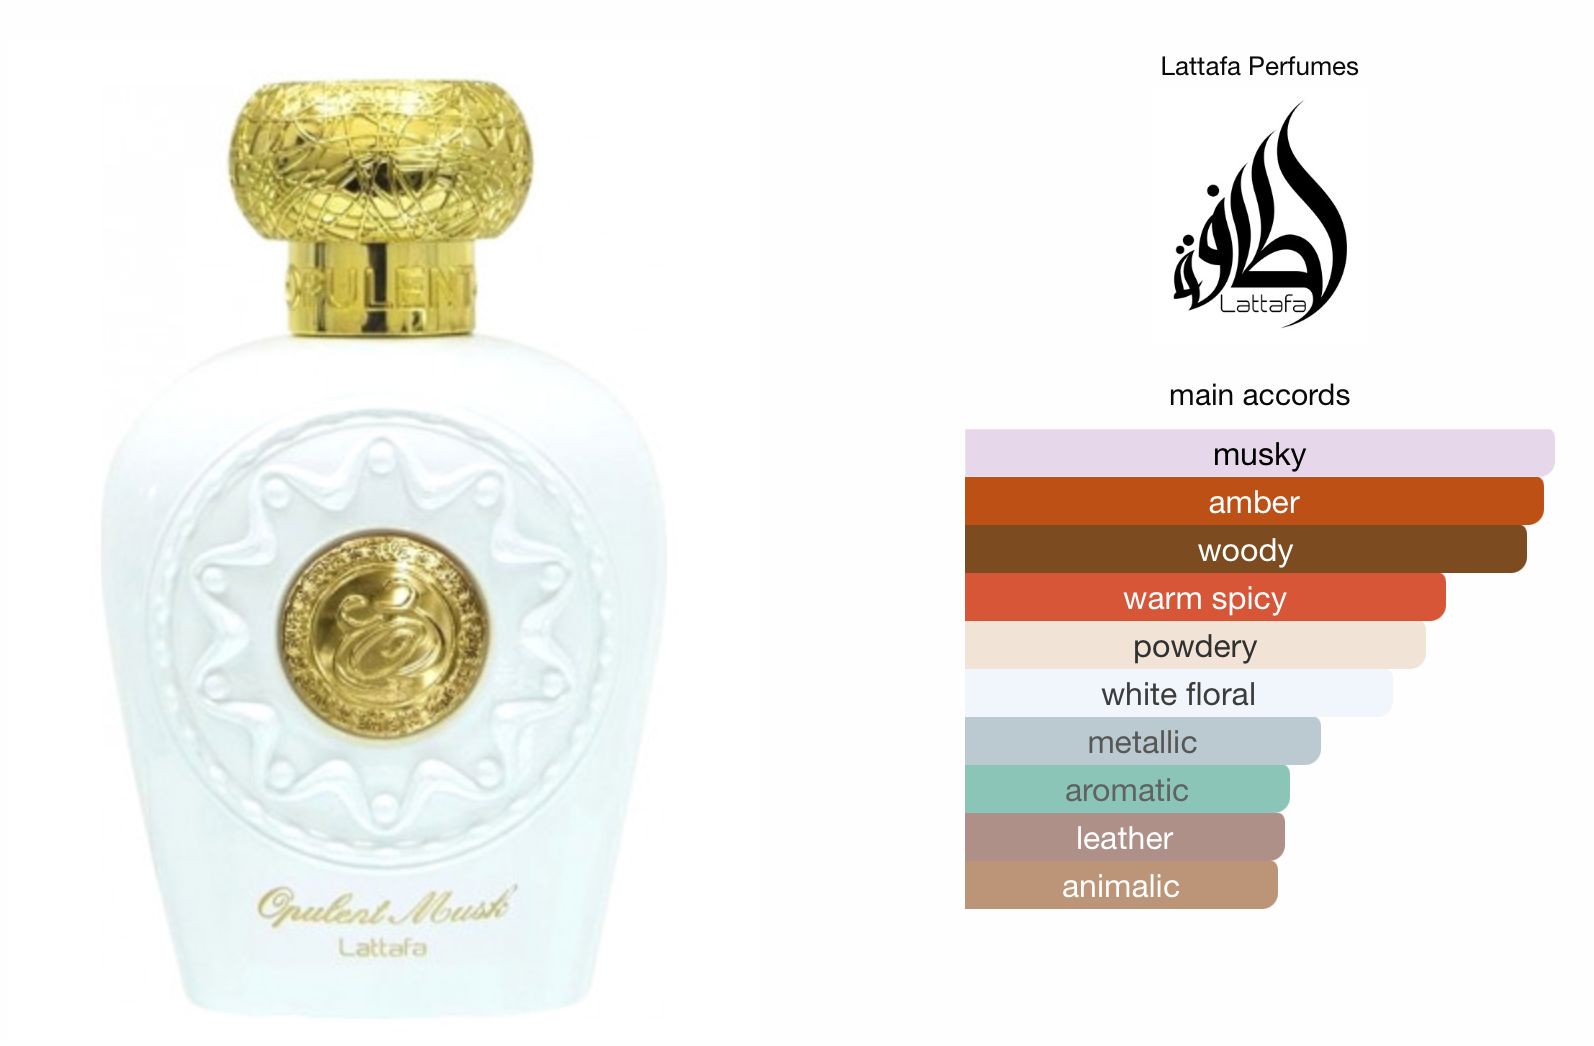 Opulent Musk EDP (100ml) Perfume Spray by Lattafa Perfumes